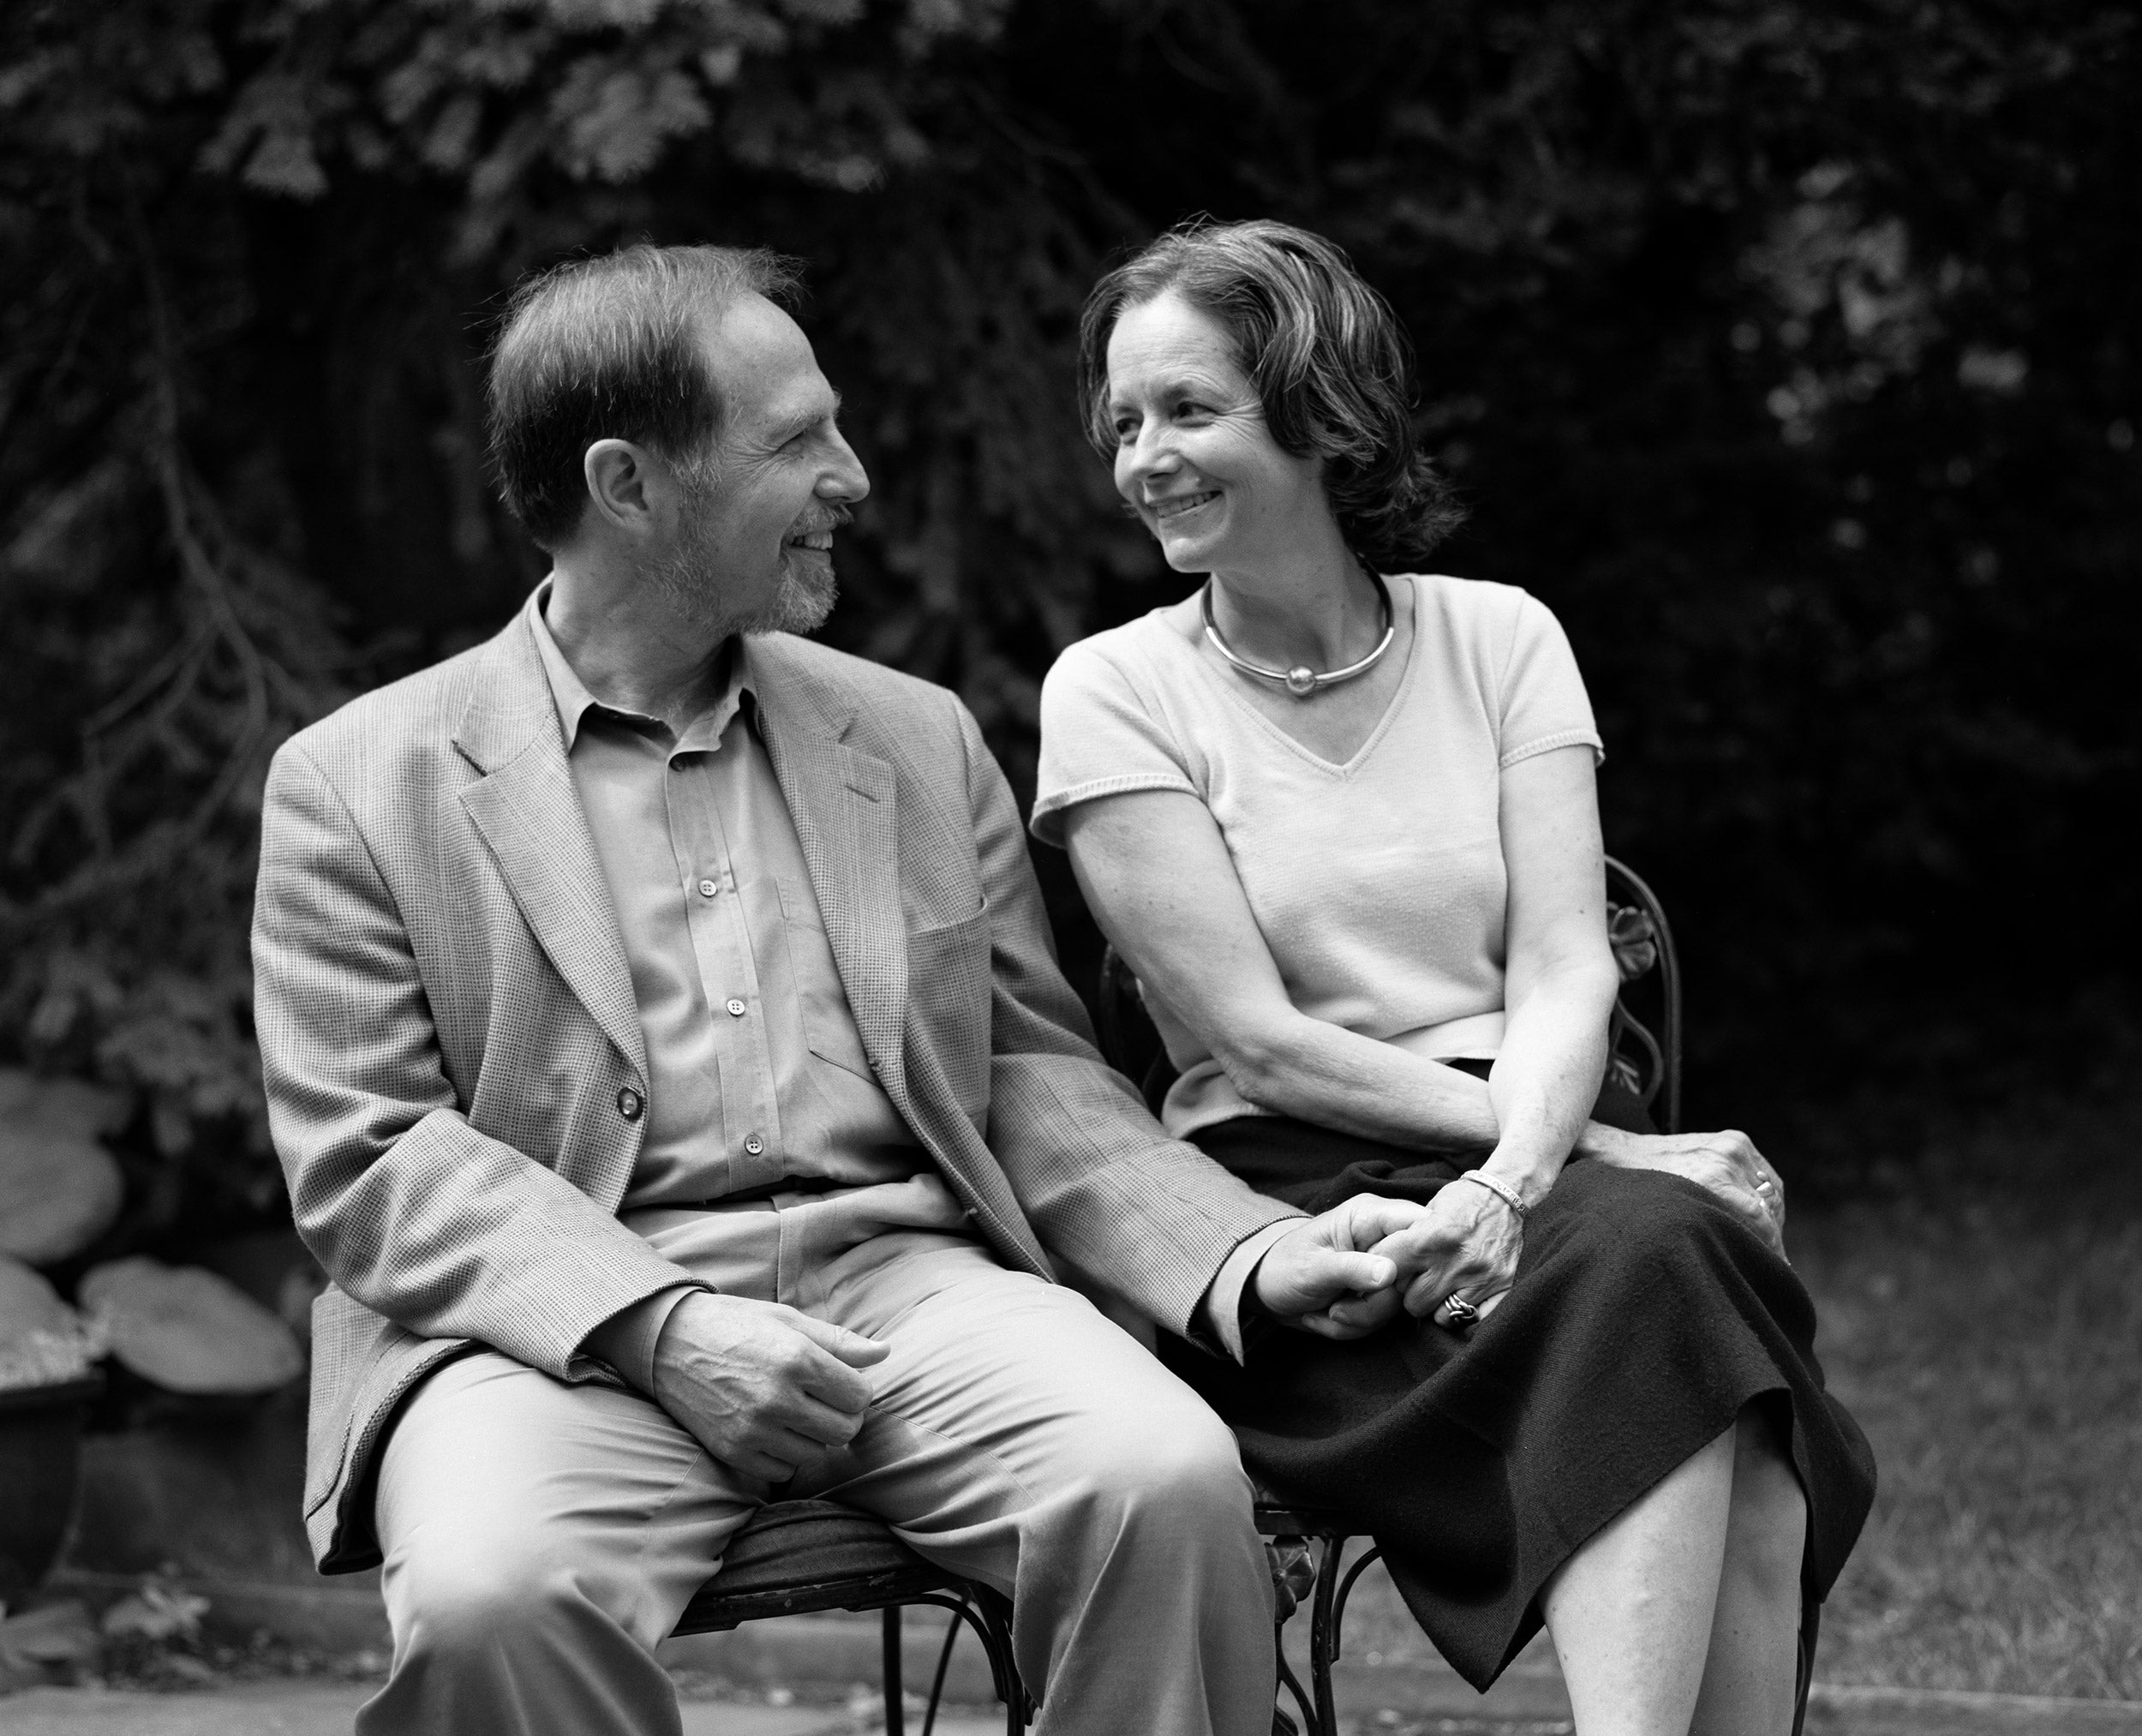 Arthur Kleinman and his wife